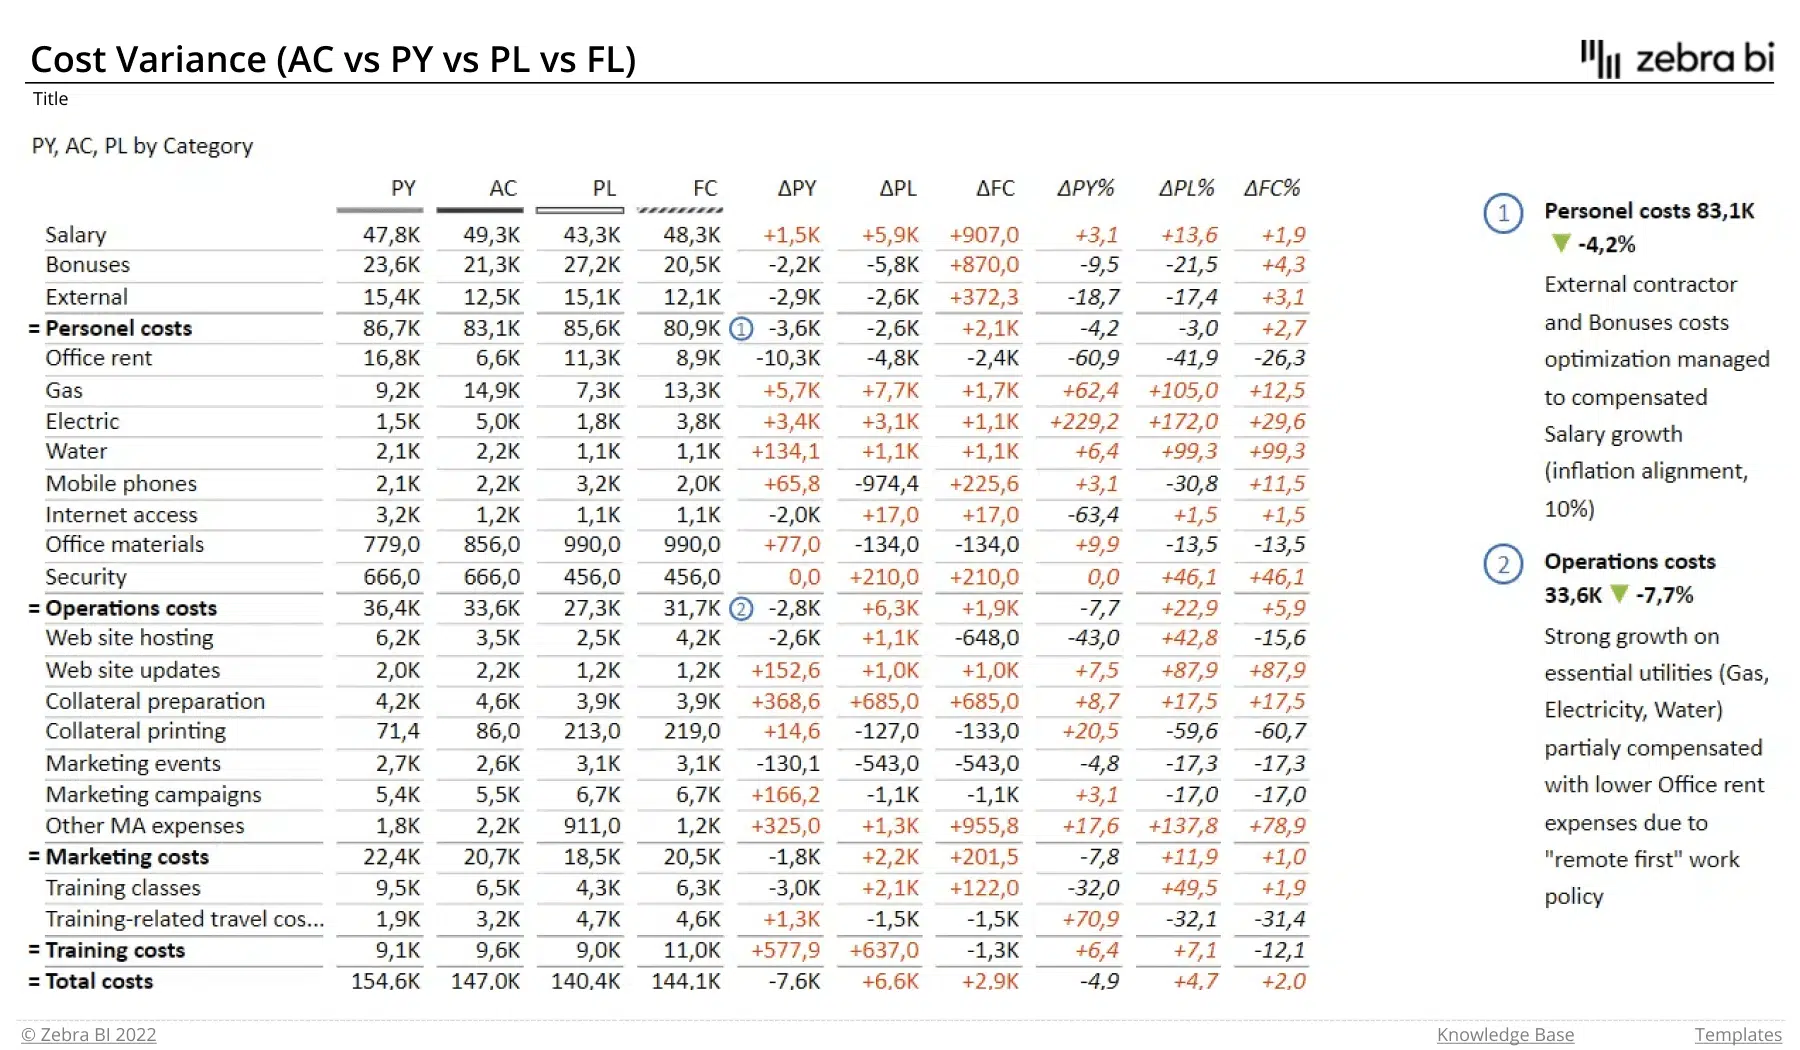 Cost variance table (AC vs PY vs PL vs FC)